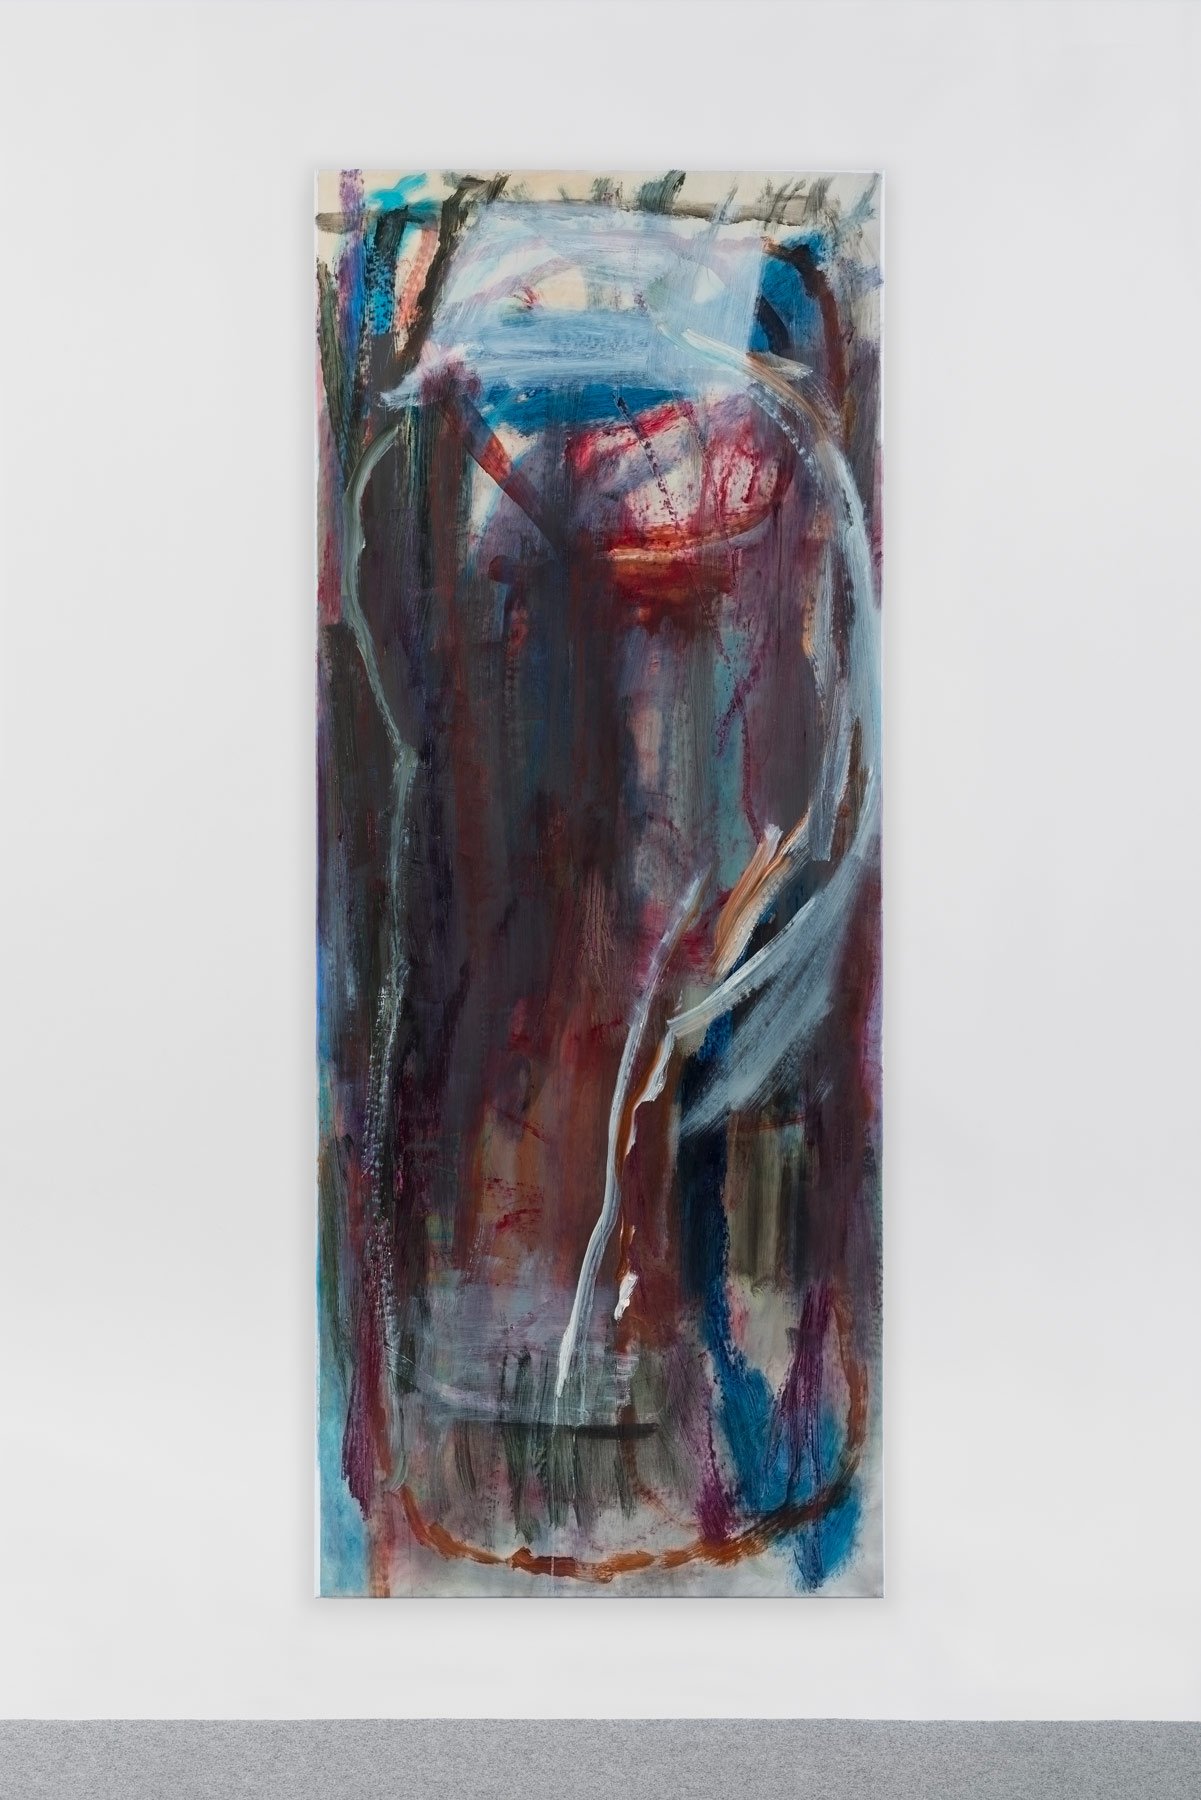 B01 - 0320, 2020, oil on canvas, 242 x 96 cm